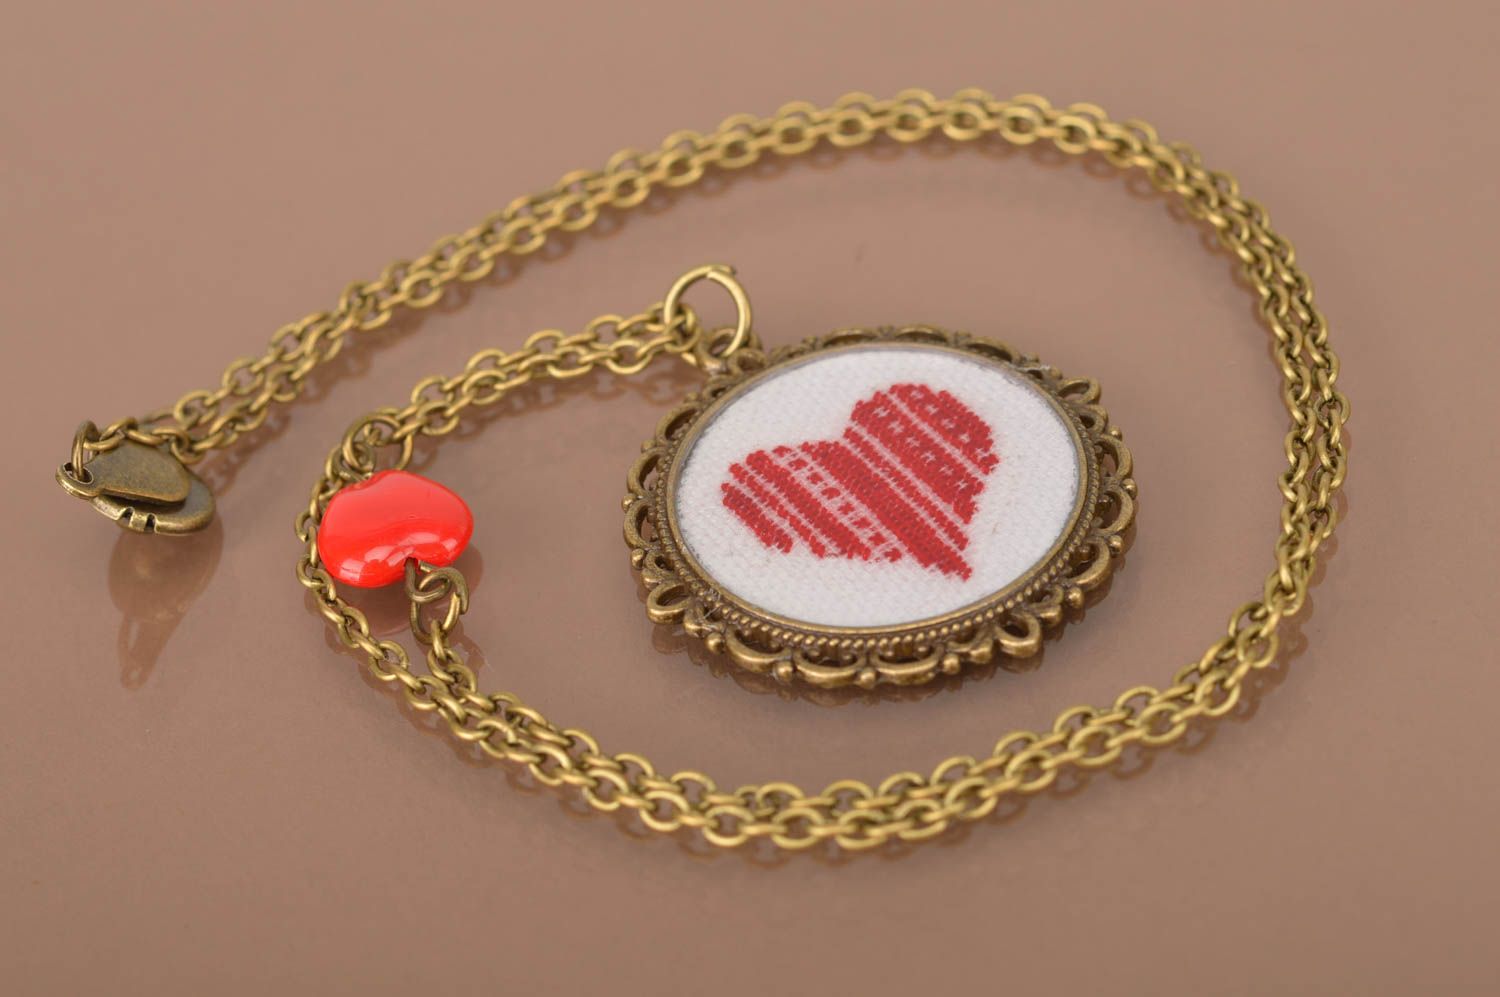 Handmade jewellery pendant necklace chain necklace fashion accessories gift idea photo 3